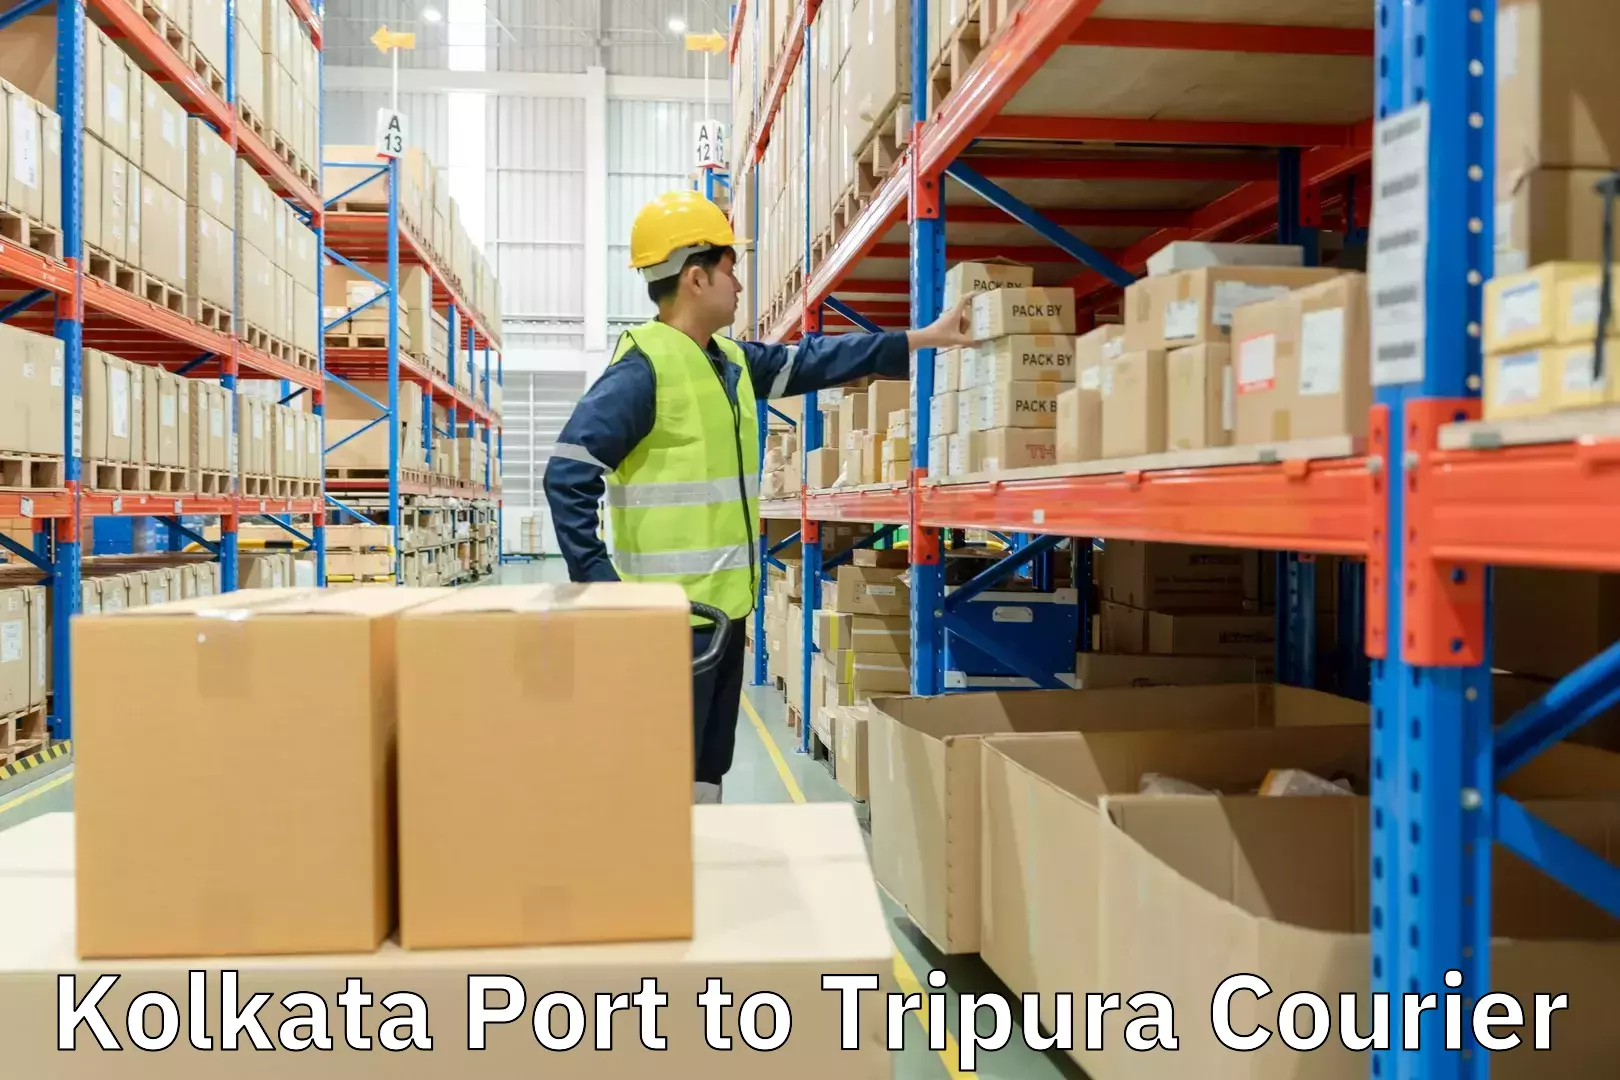 Nationwide delivery network Kolkata Port to Tripura